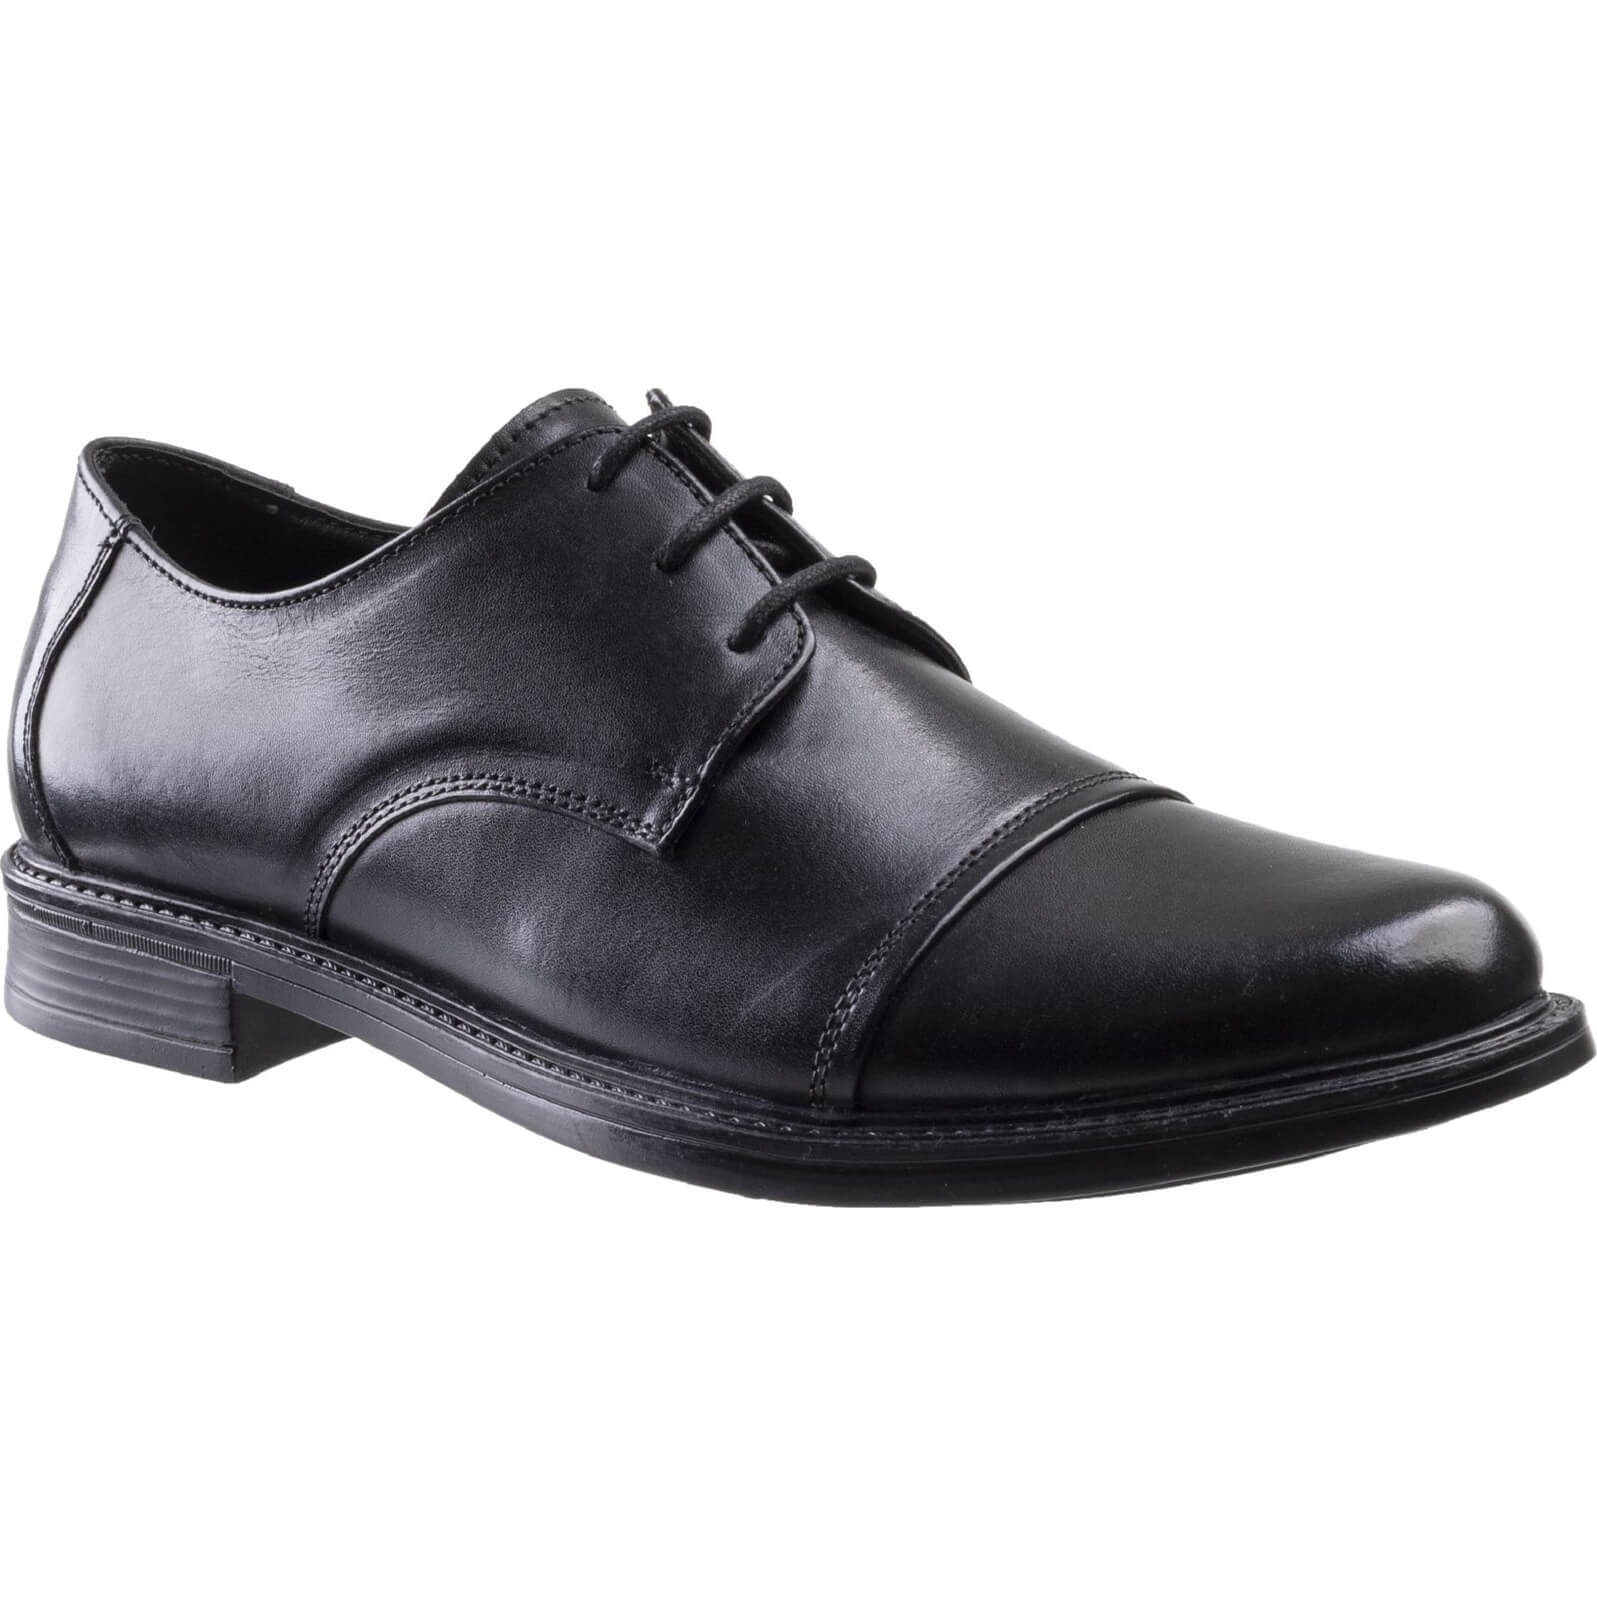 Image of Amblers Bristol Lace Up Shoe Black Size 12